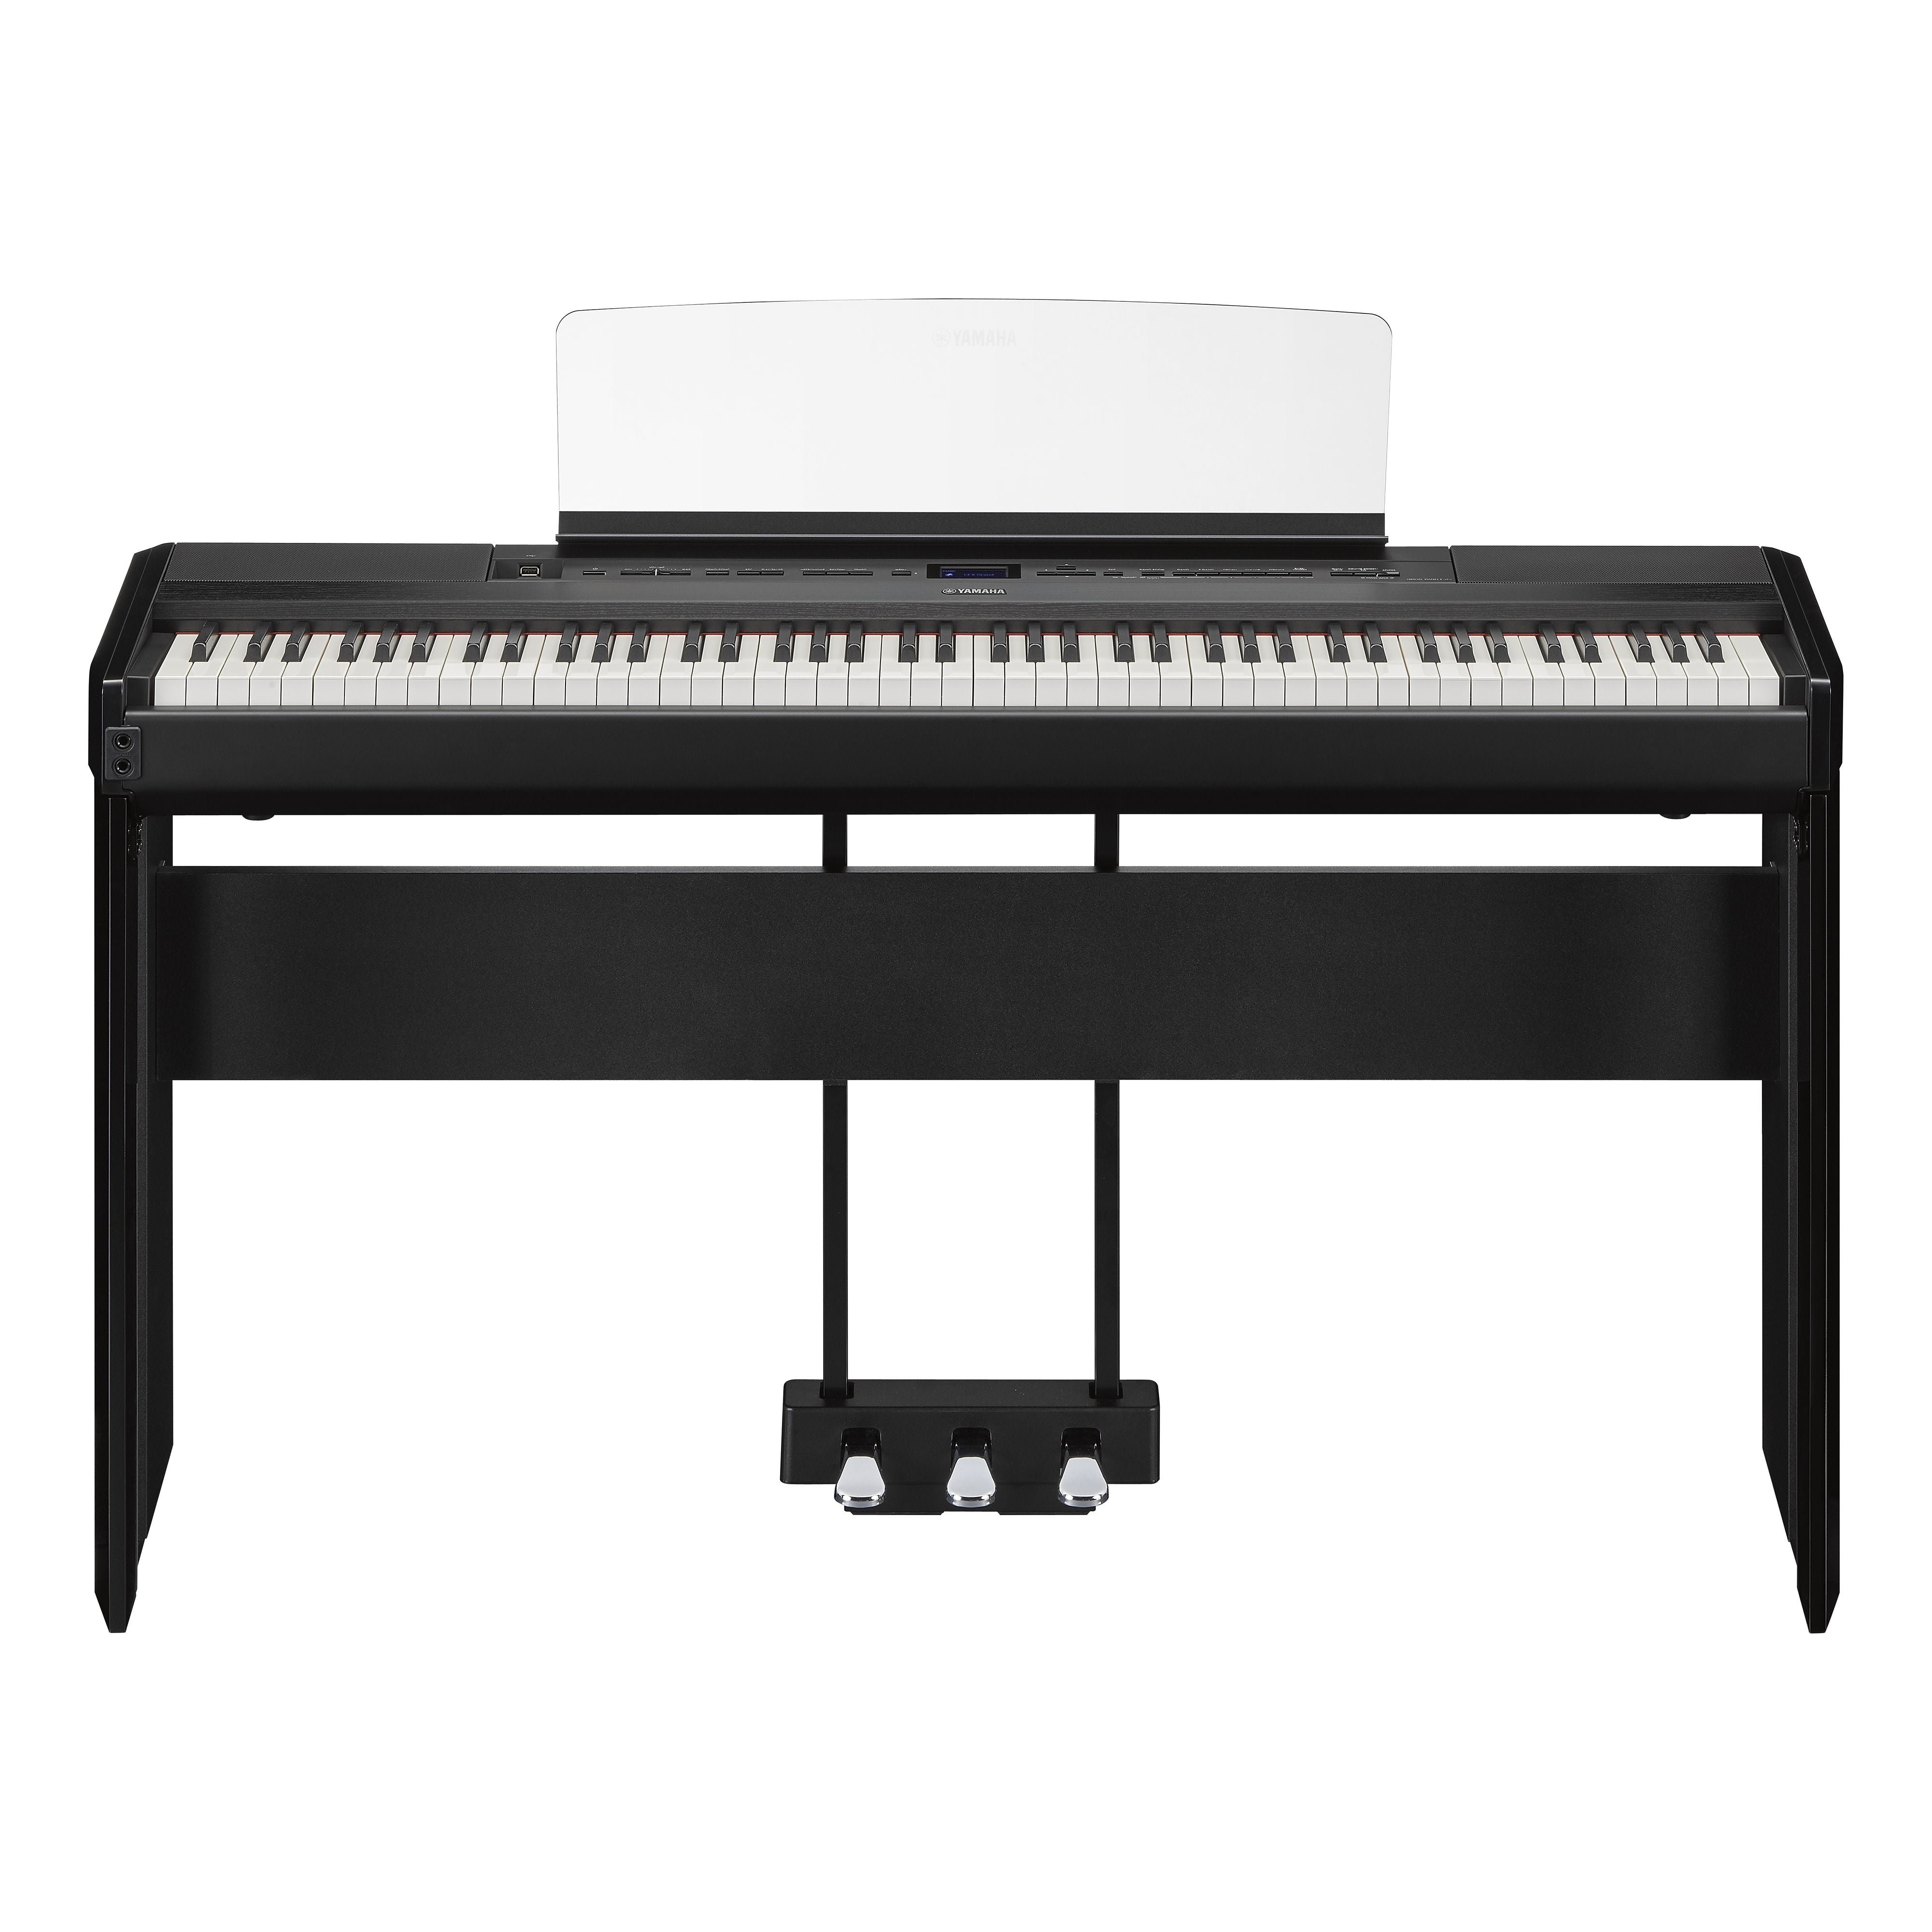 [*3 Years Warranty] Yamaha P-525 Digital Piano (with Pedal and Free Headphones, AC Adaptor)